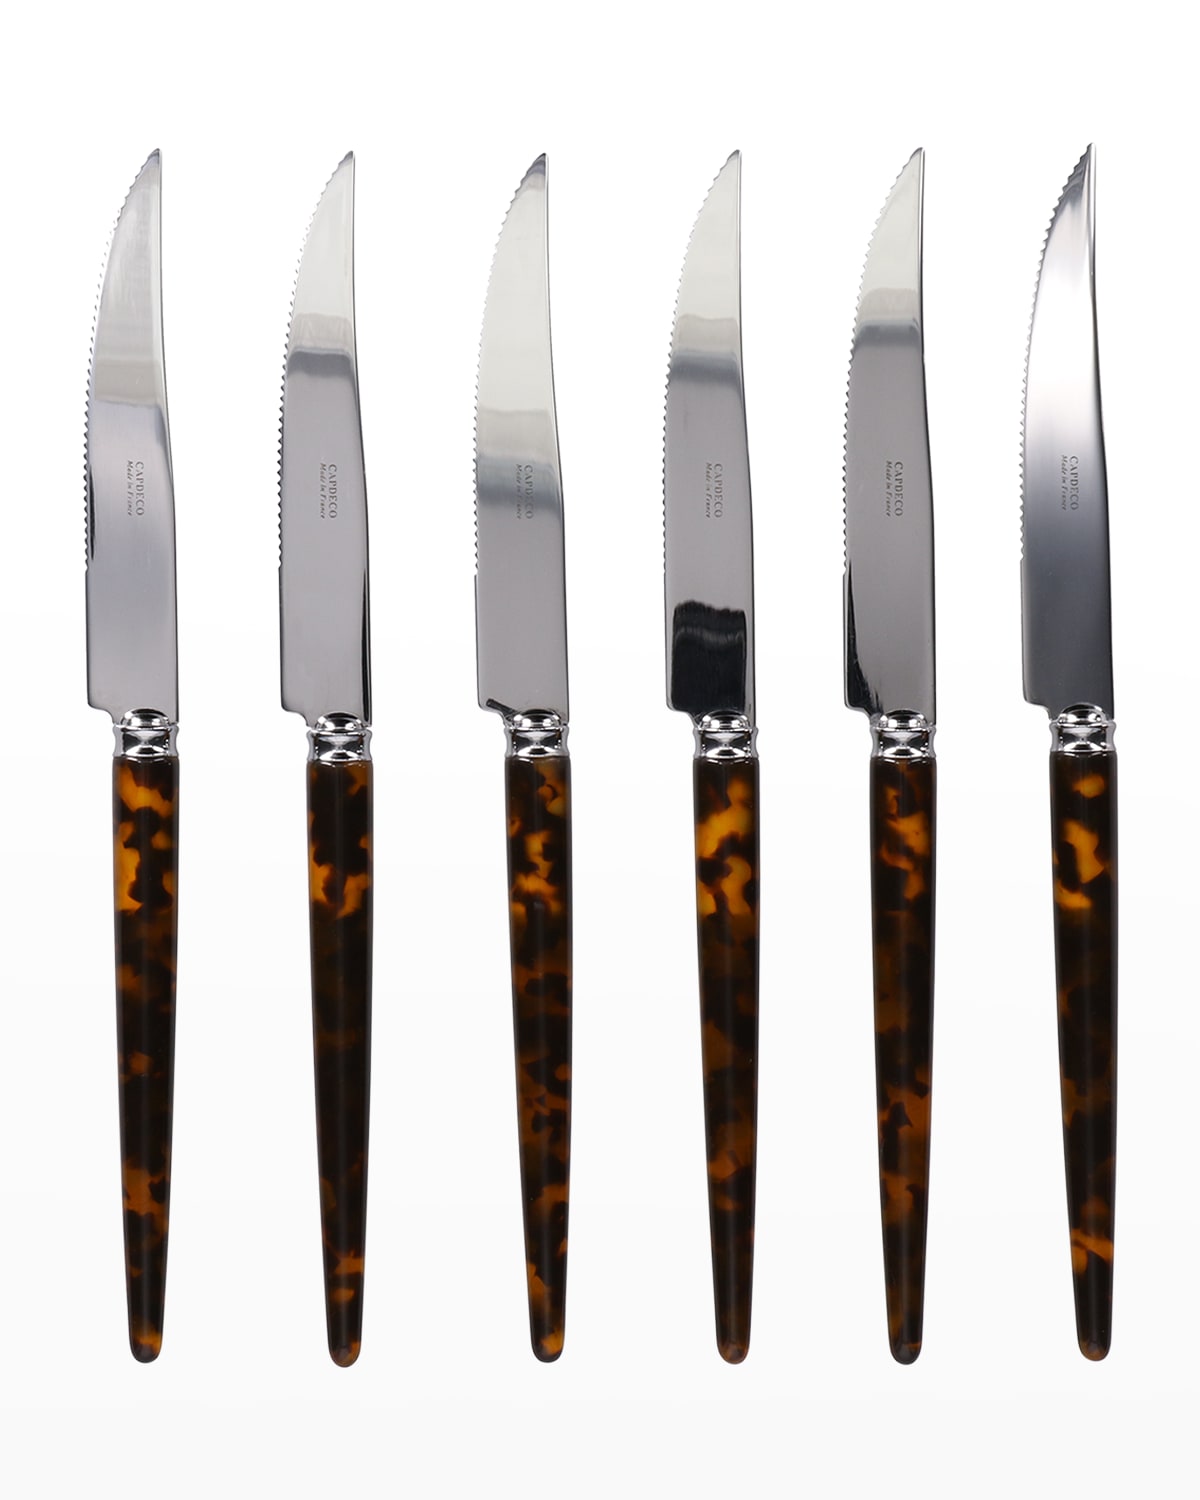 VIETRI Settimocielo ORO Steak Knives, Set of 4